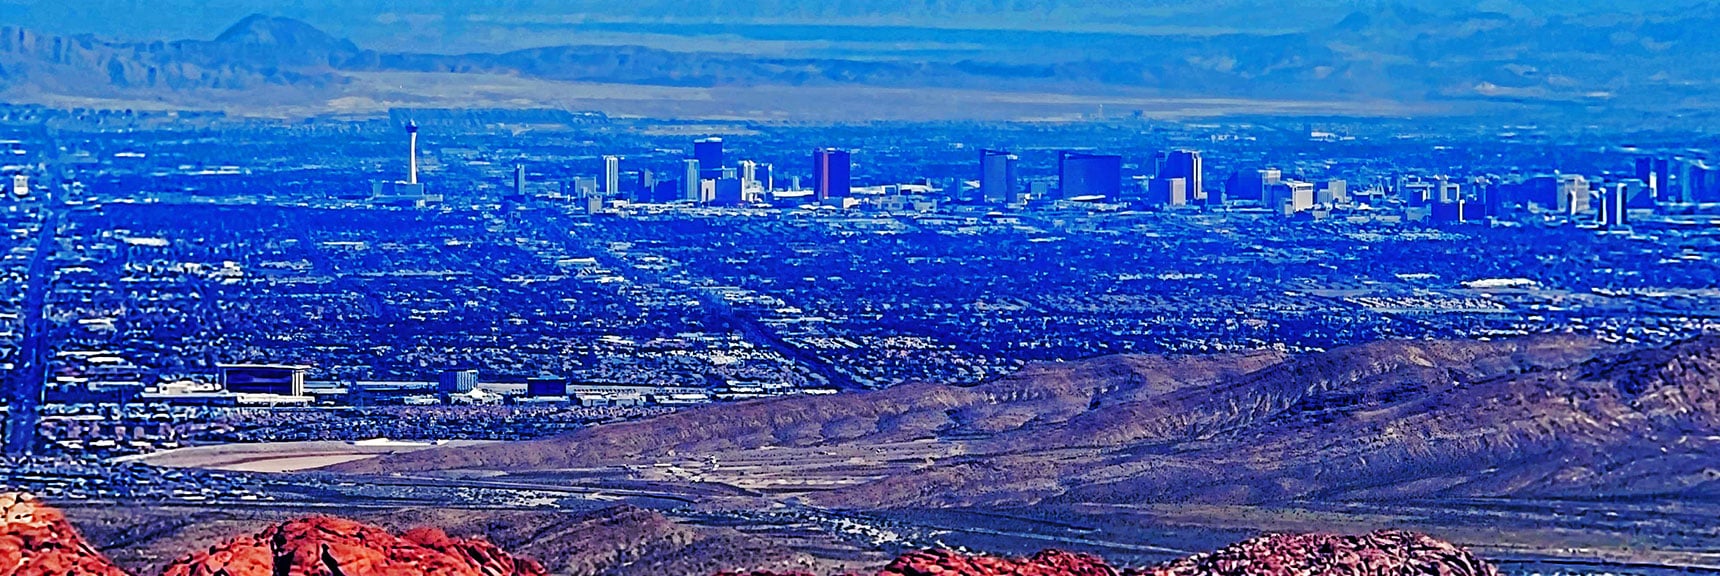 Closer View of Las Vegas Strip. | Switchback Spring Pinnacle | Wilson Ridge | Lovell Canyon, Nevada